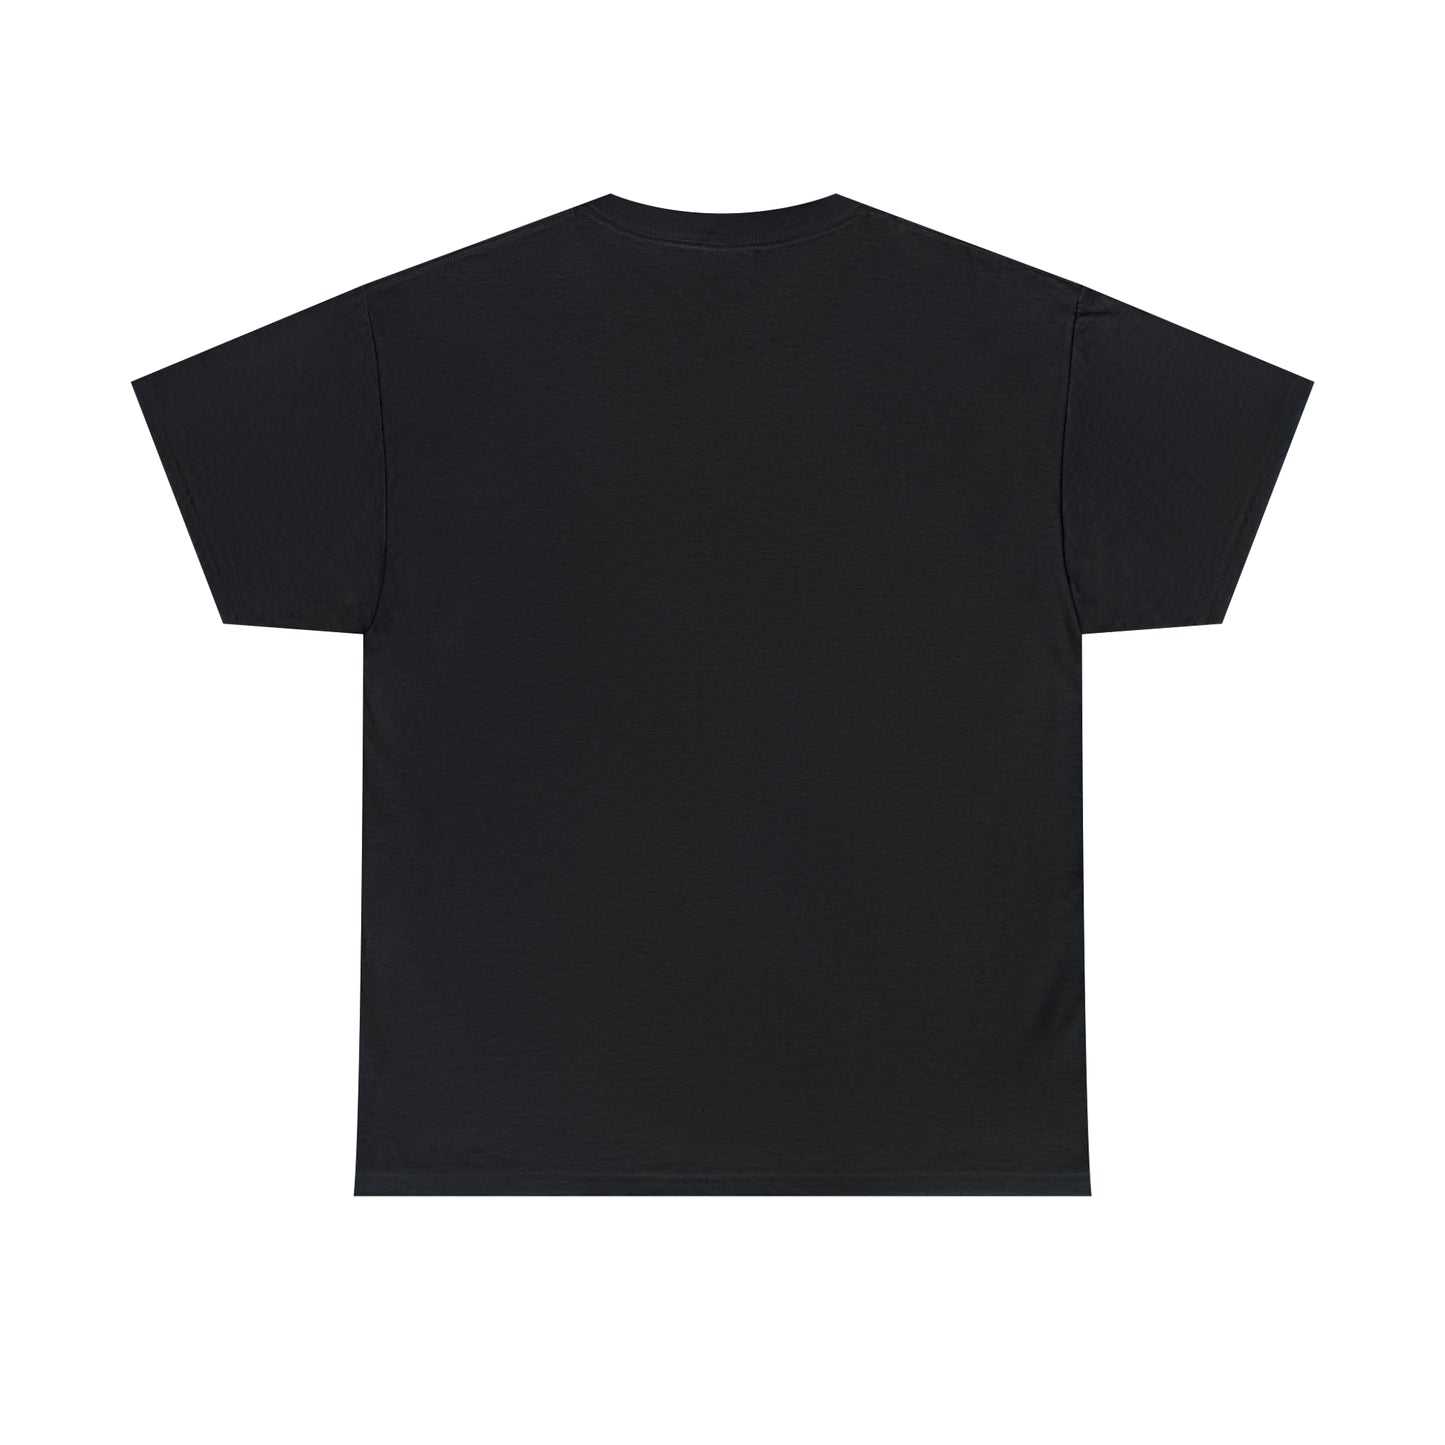 Patrick Bateman Sigma T-Shirt